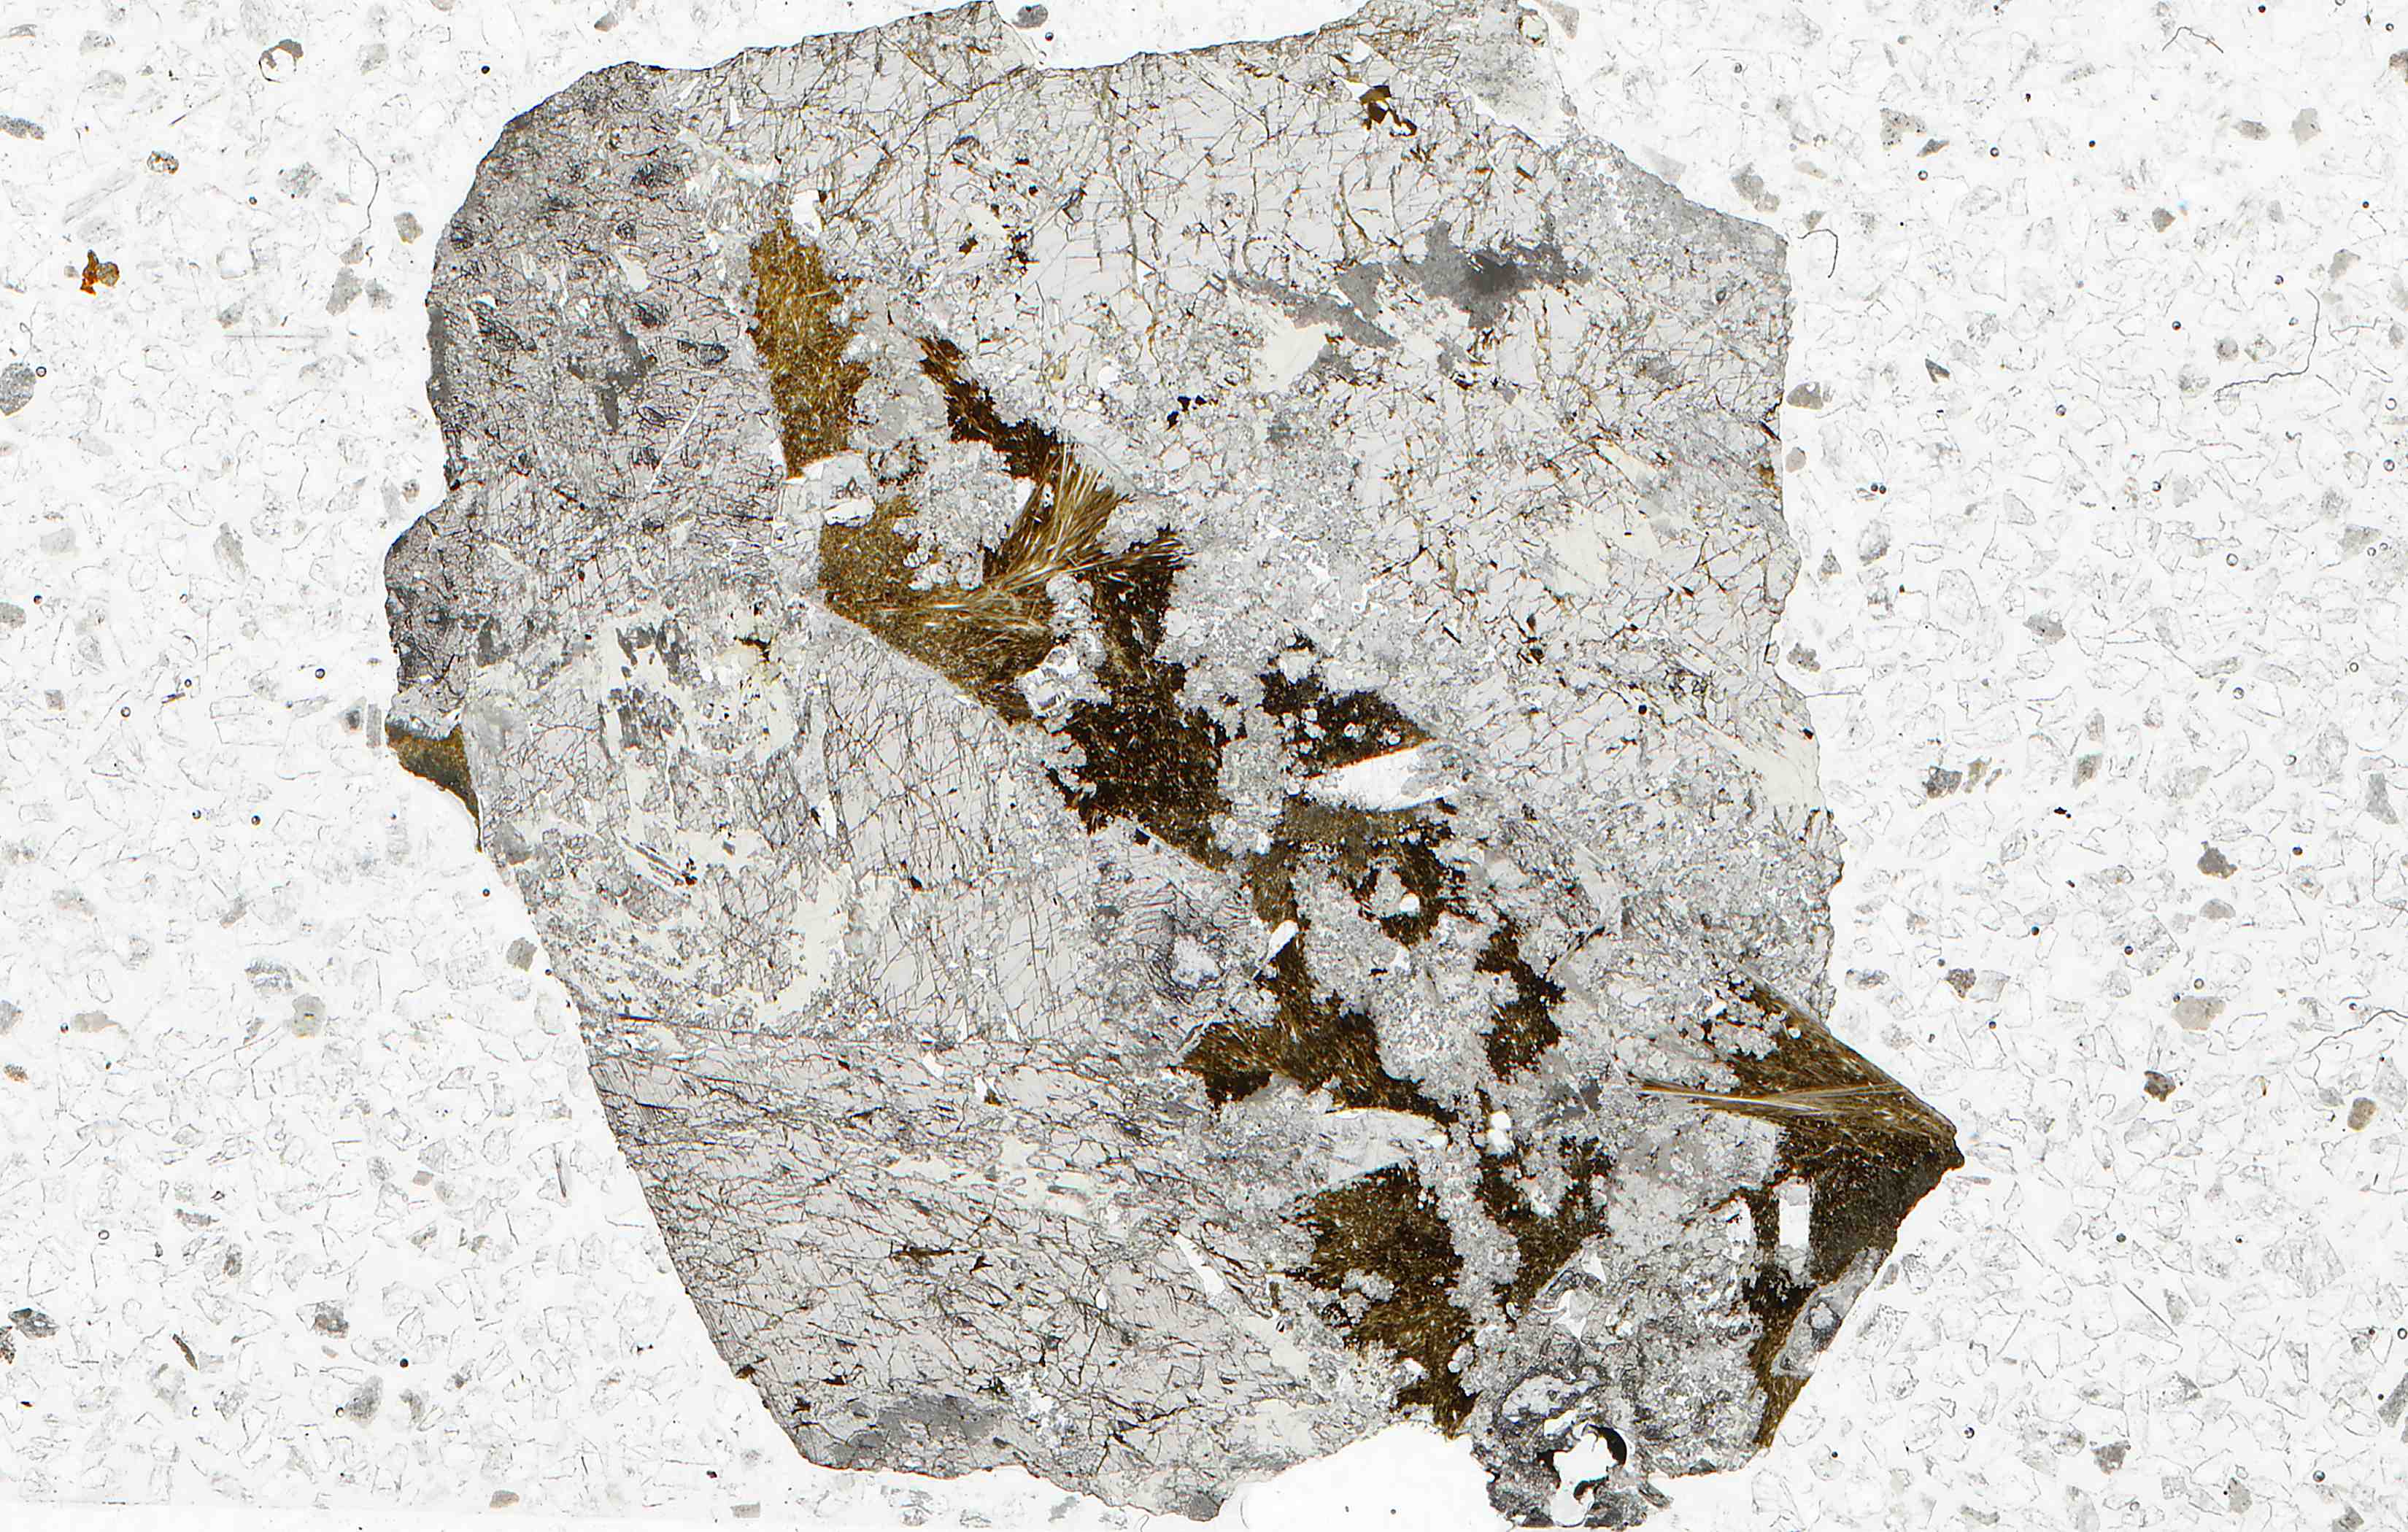 Nippyo mine Japan proto-ferro-suenoite in thin section